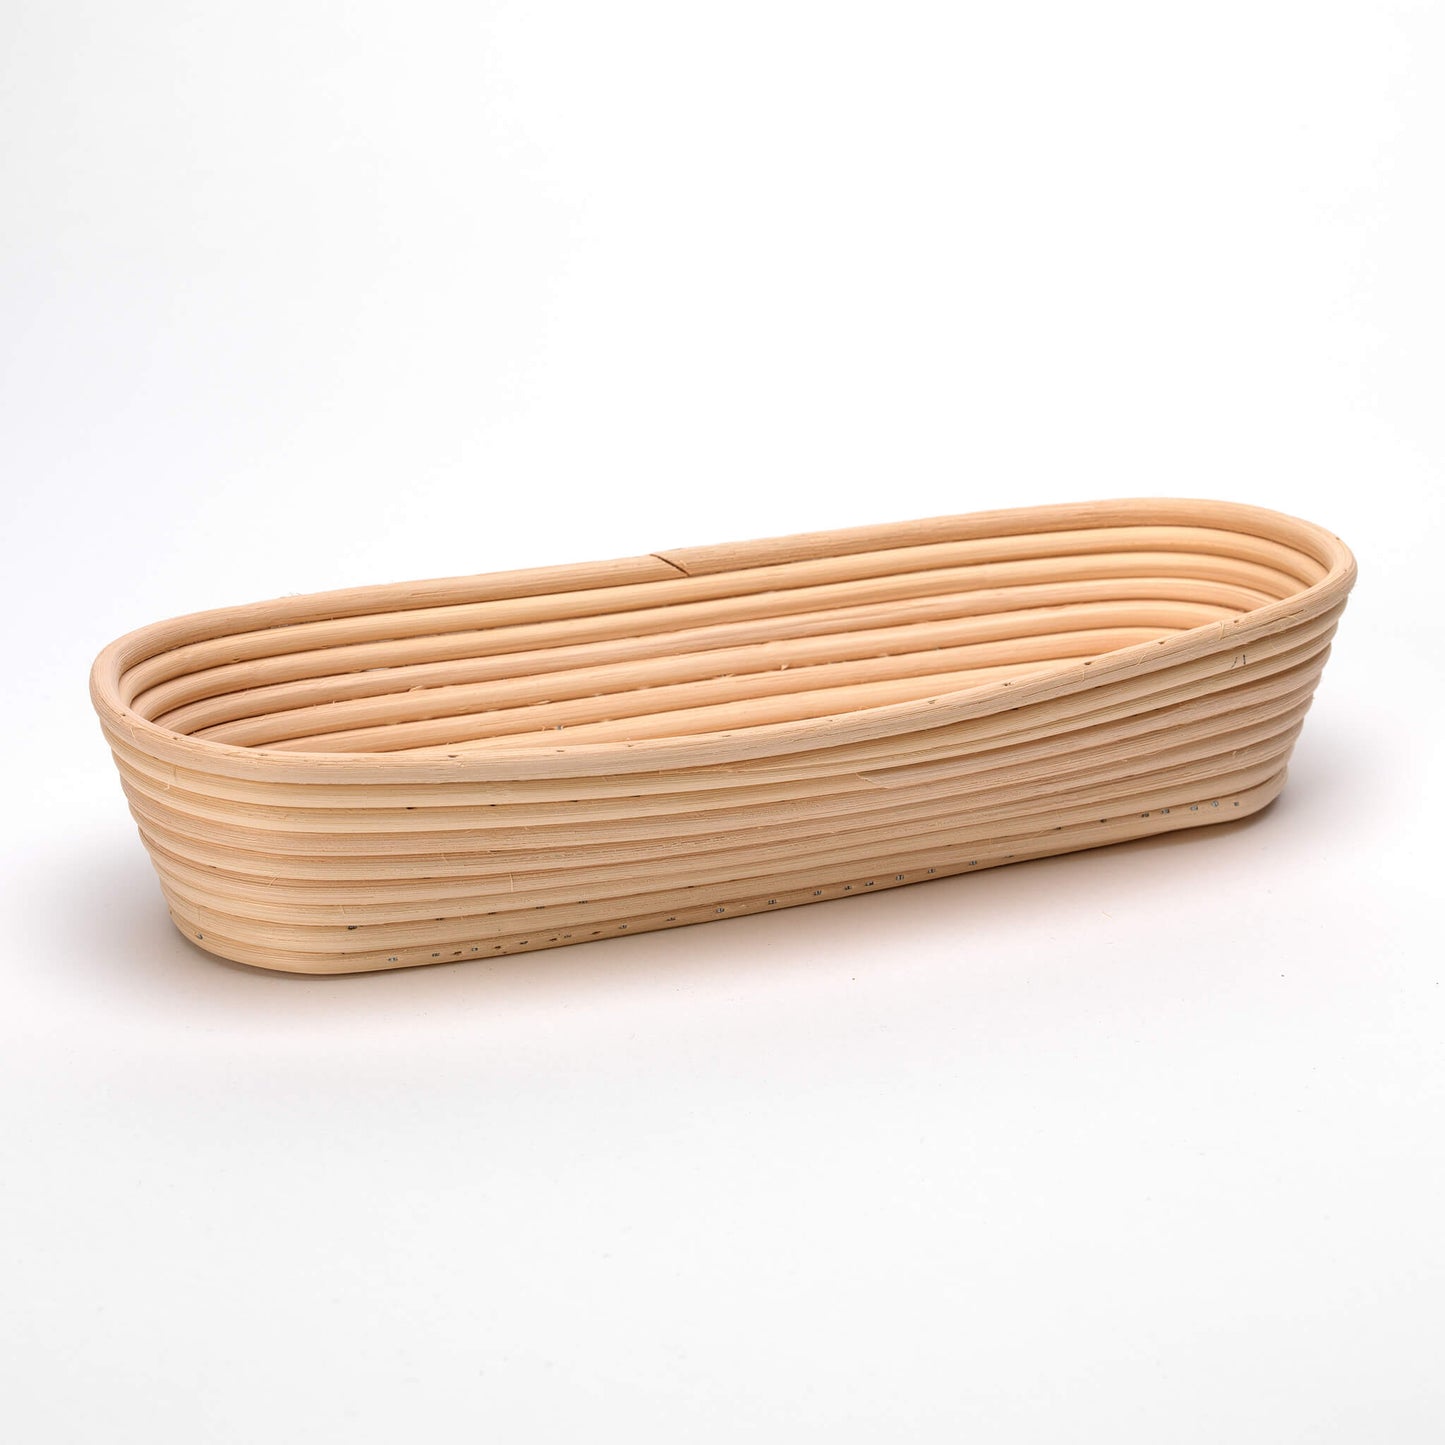 1Kg Oval 35cm Long Rattan Cane Banneton with Liner  Bread Dough Proving Proofing Basket Brotform